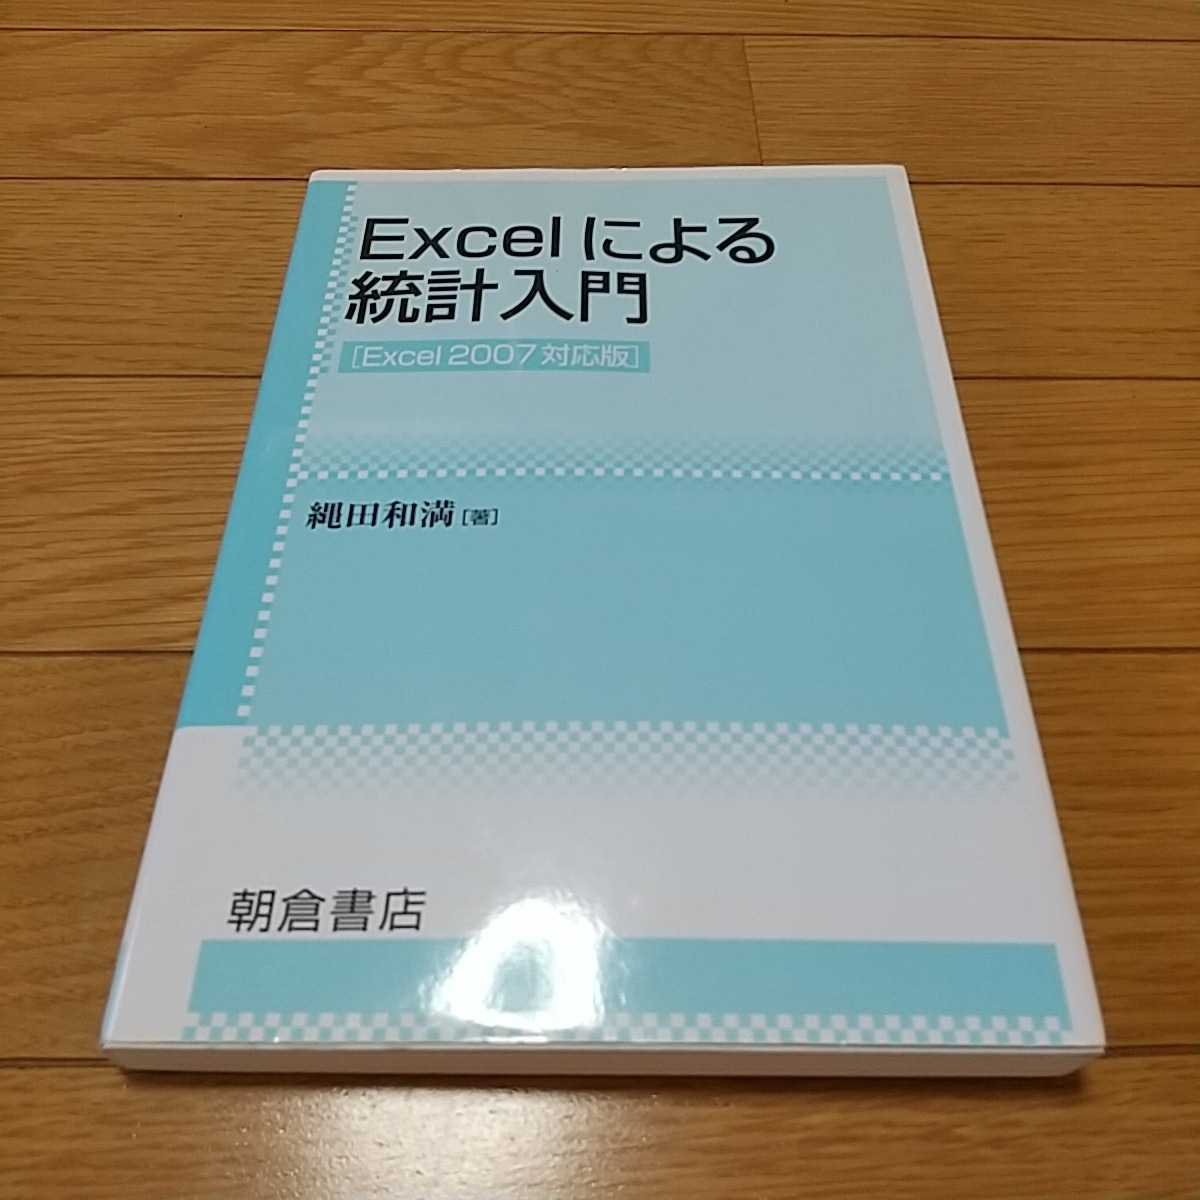 Yahoo!オークション - Excelによる統計入門 Excel2007対応版 朝倉書...